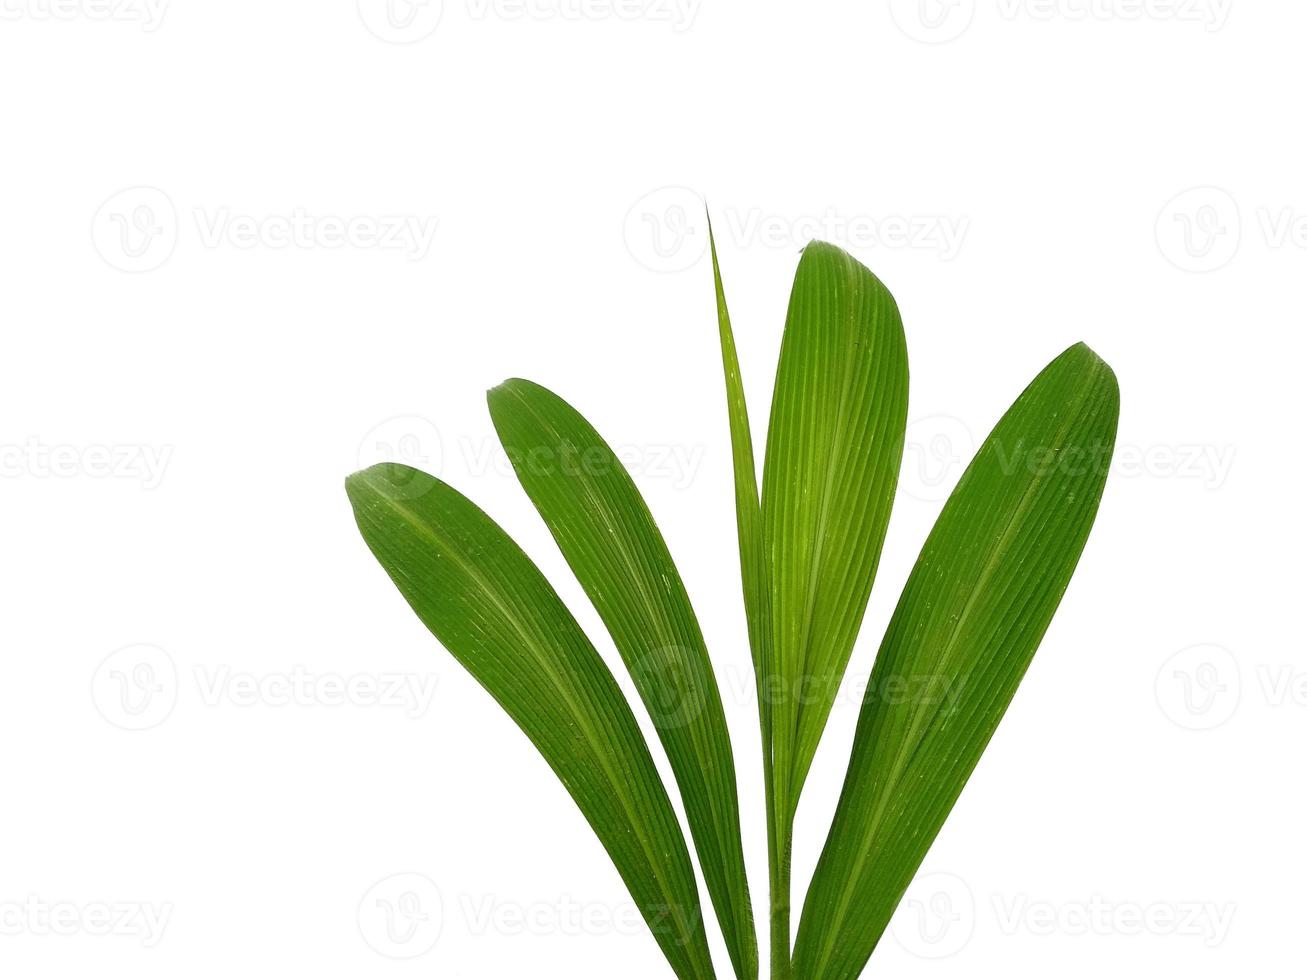 albero su sfondo bianco. foglie verdi isolate su sfondo bianco foto